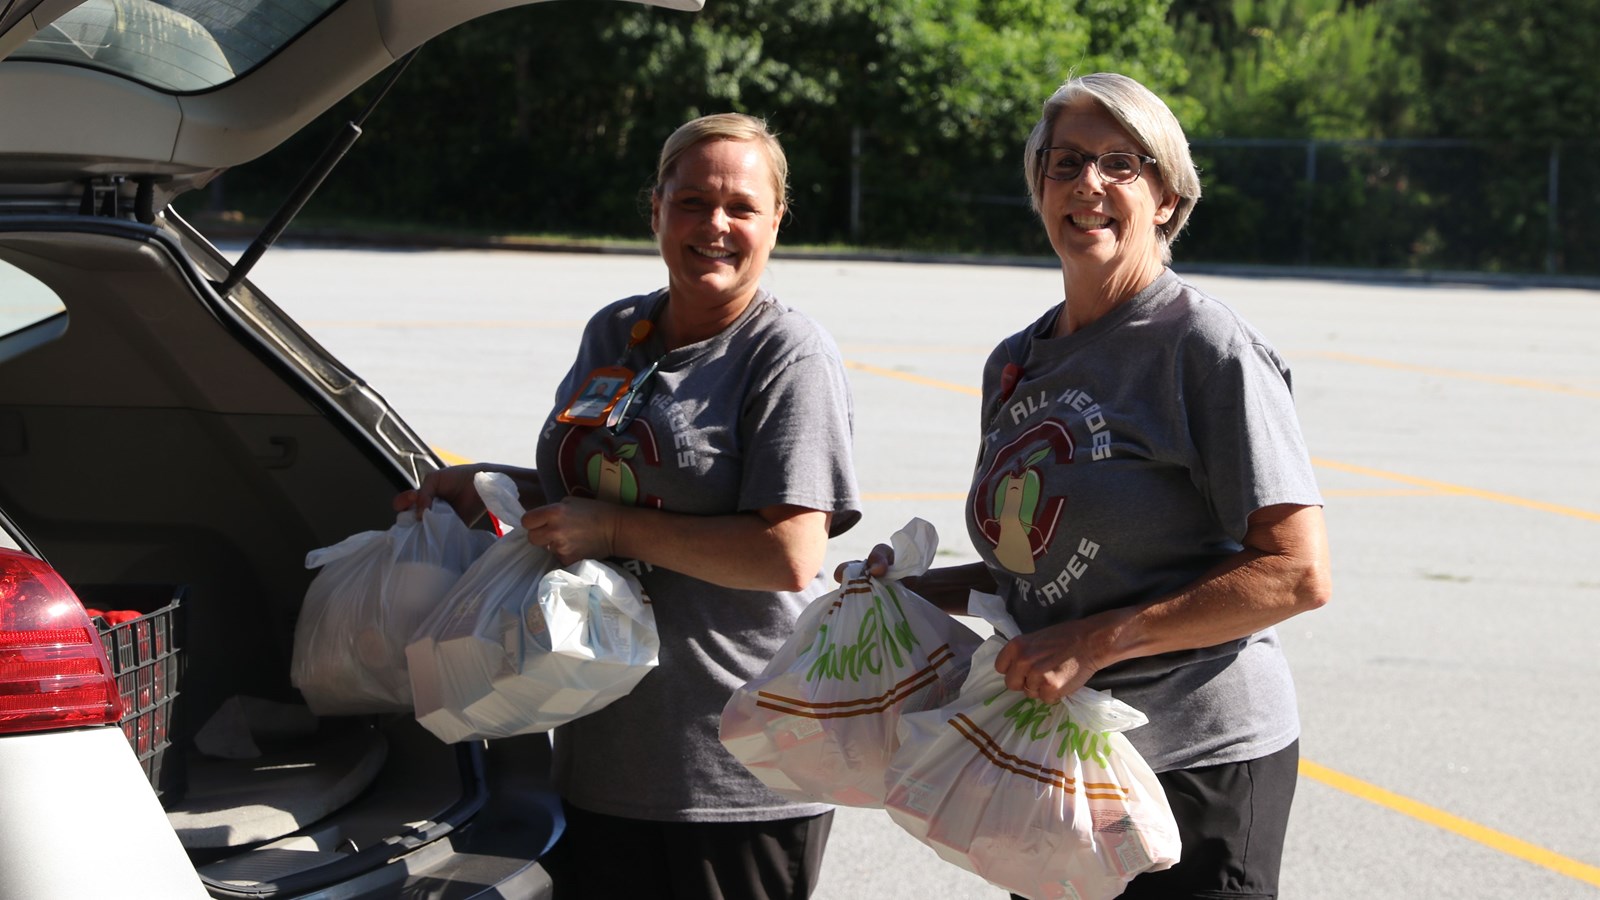 Cobb staff members load meal kits into car of Cobb parent